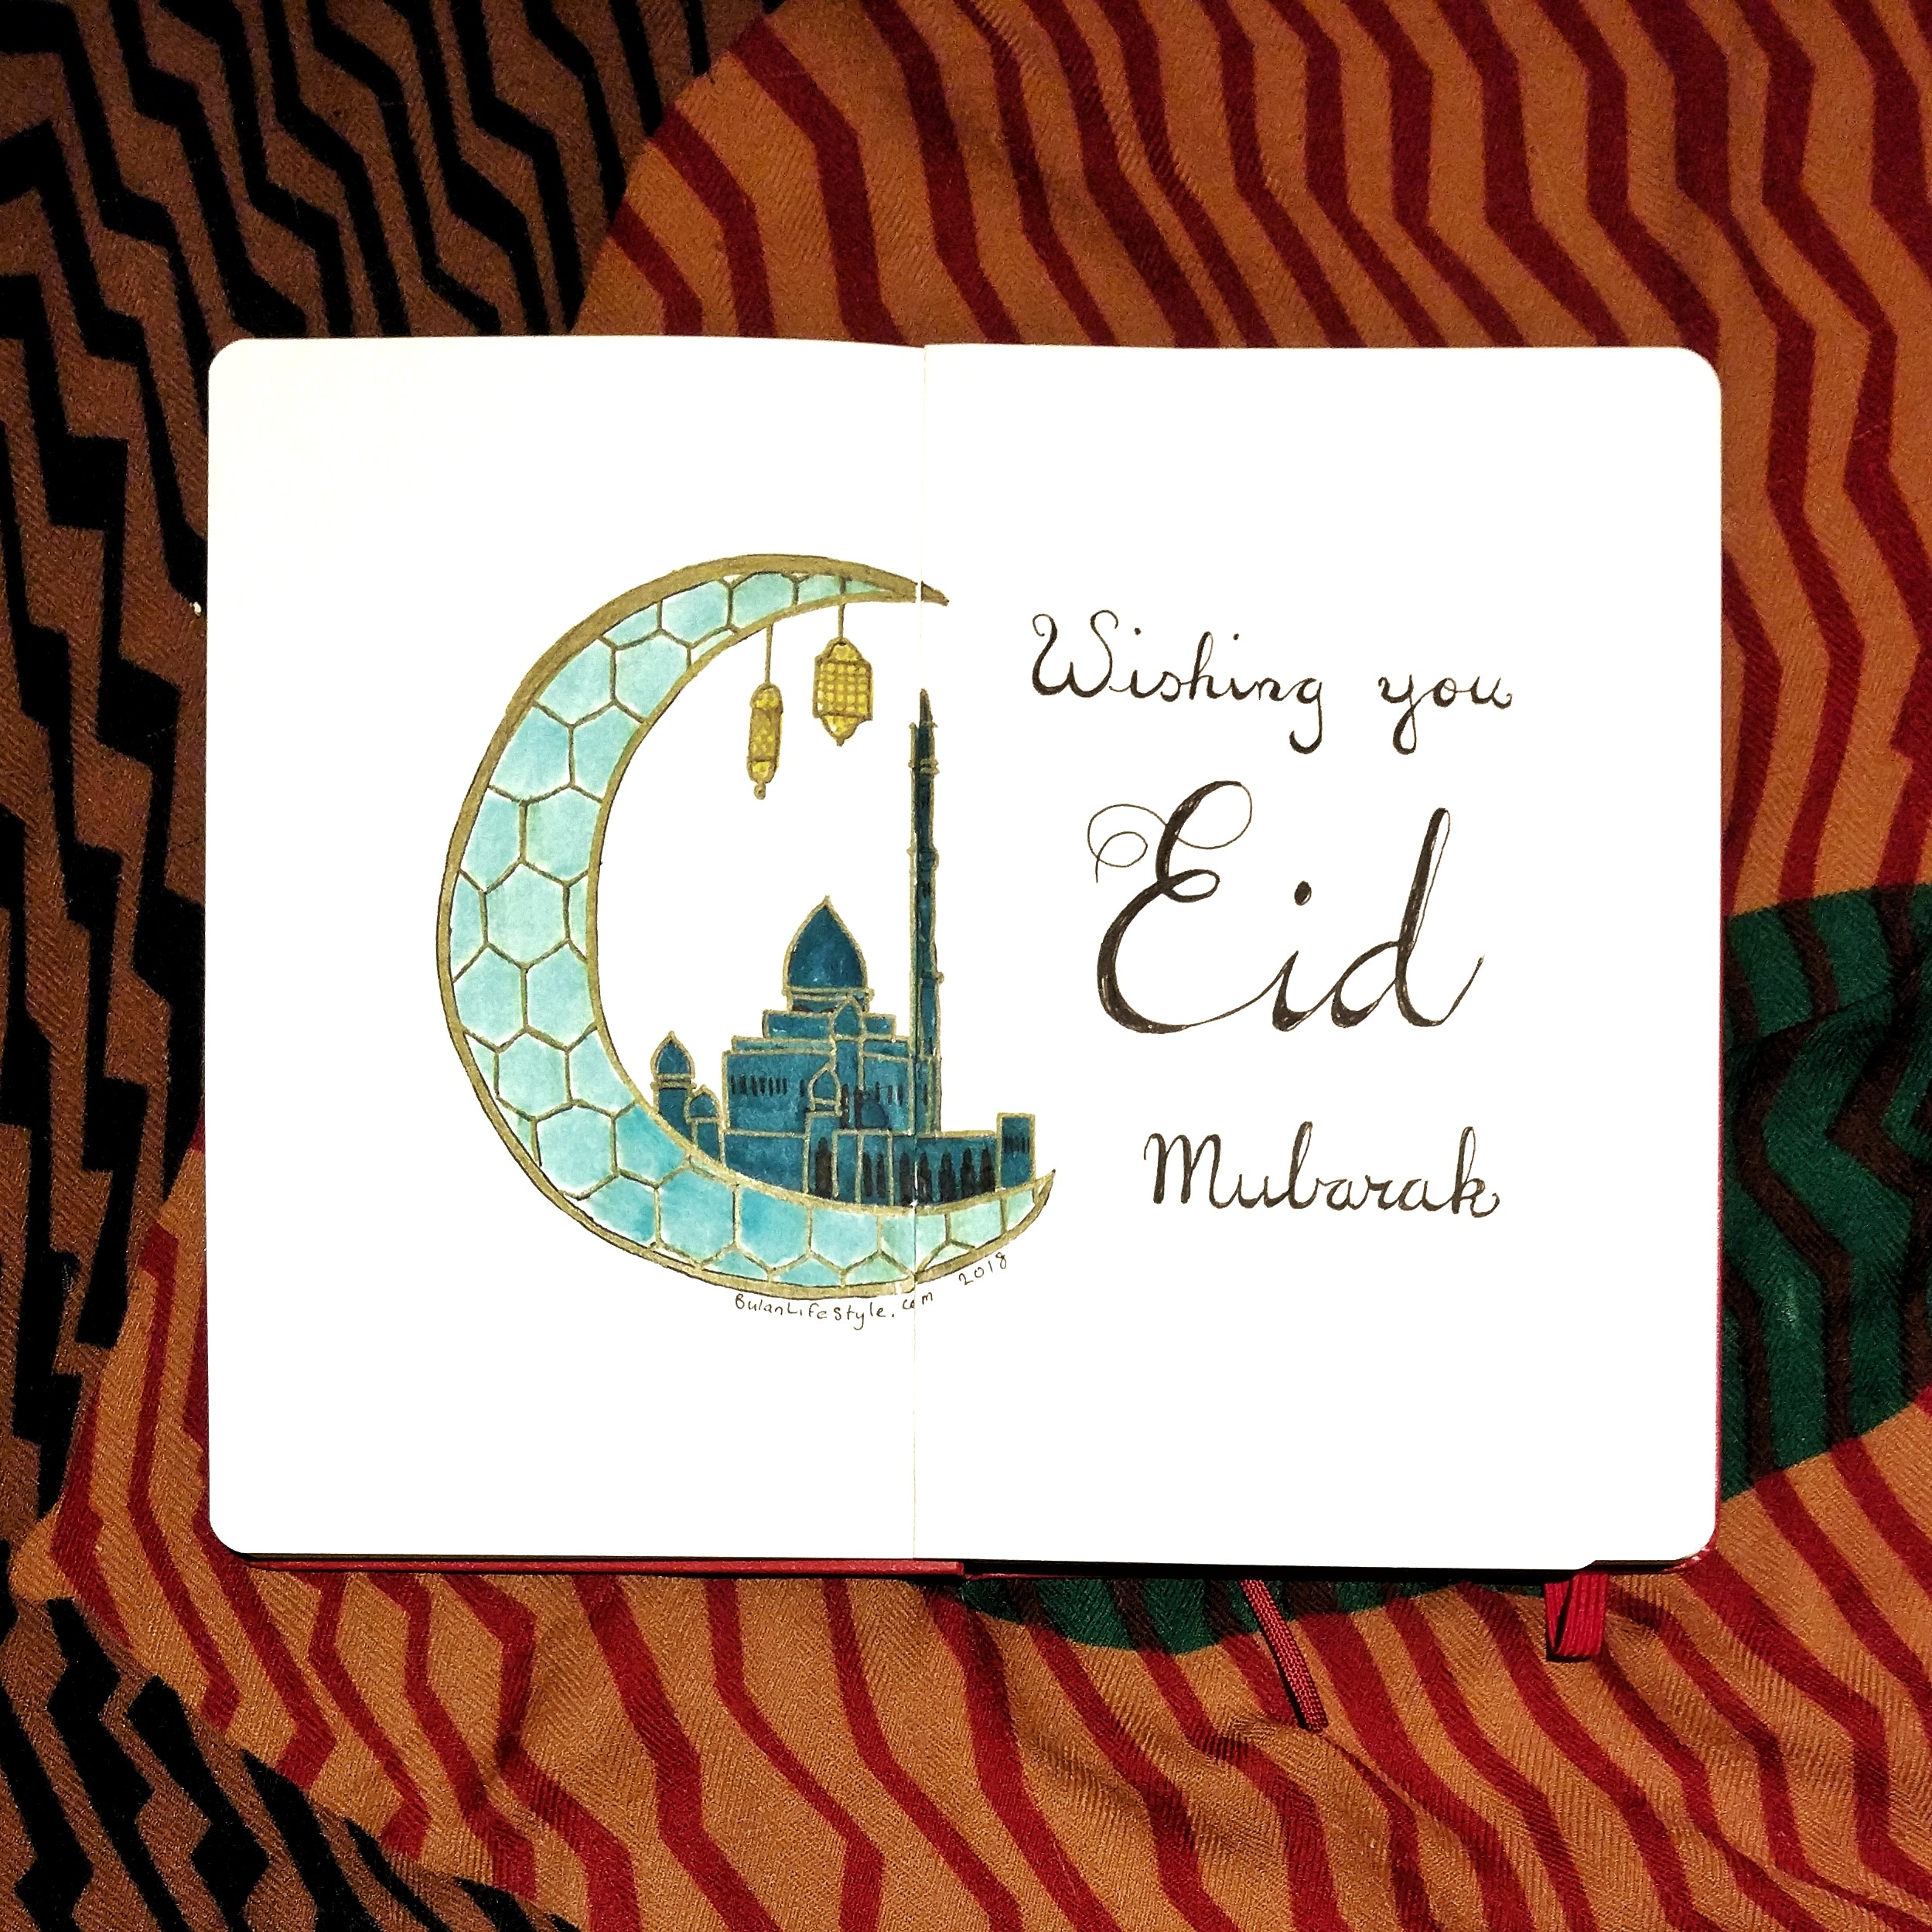 Eid mubarak